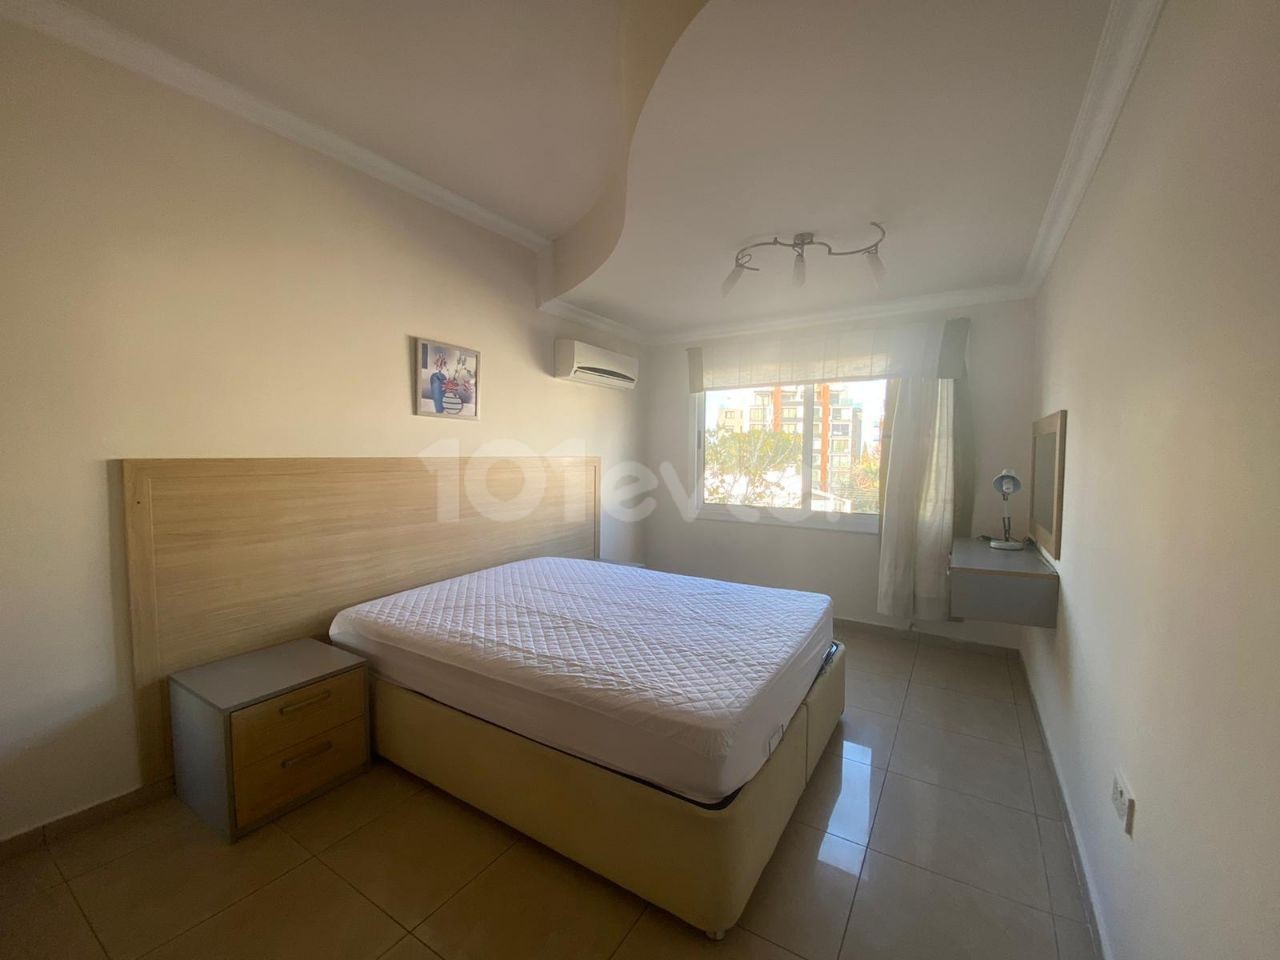 2+1 Flat for Rent in Kyrenia Center